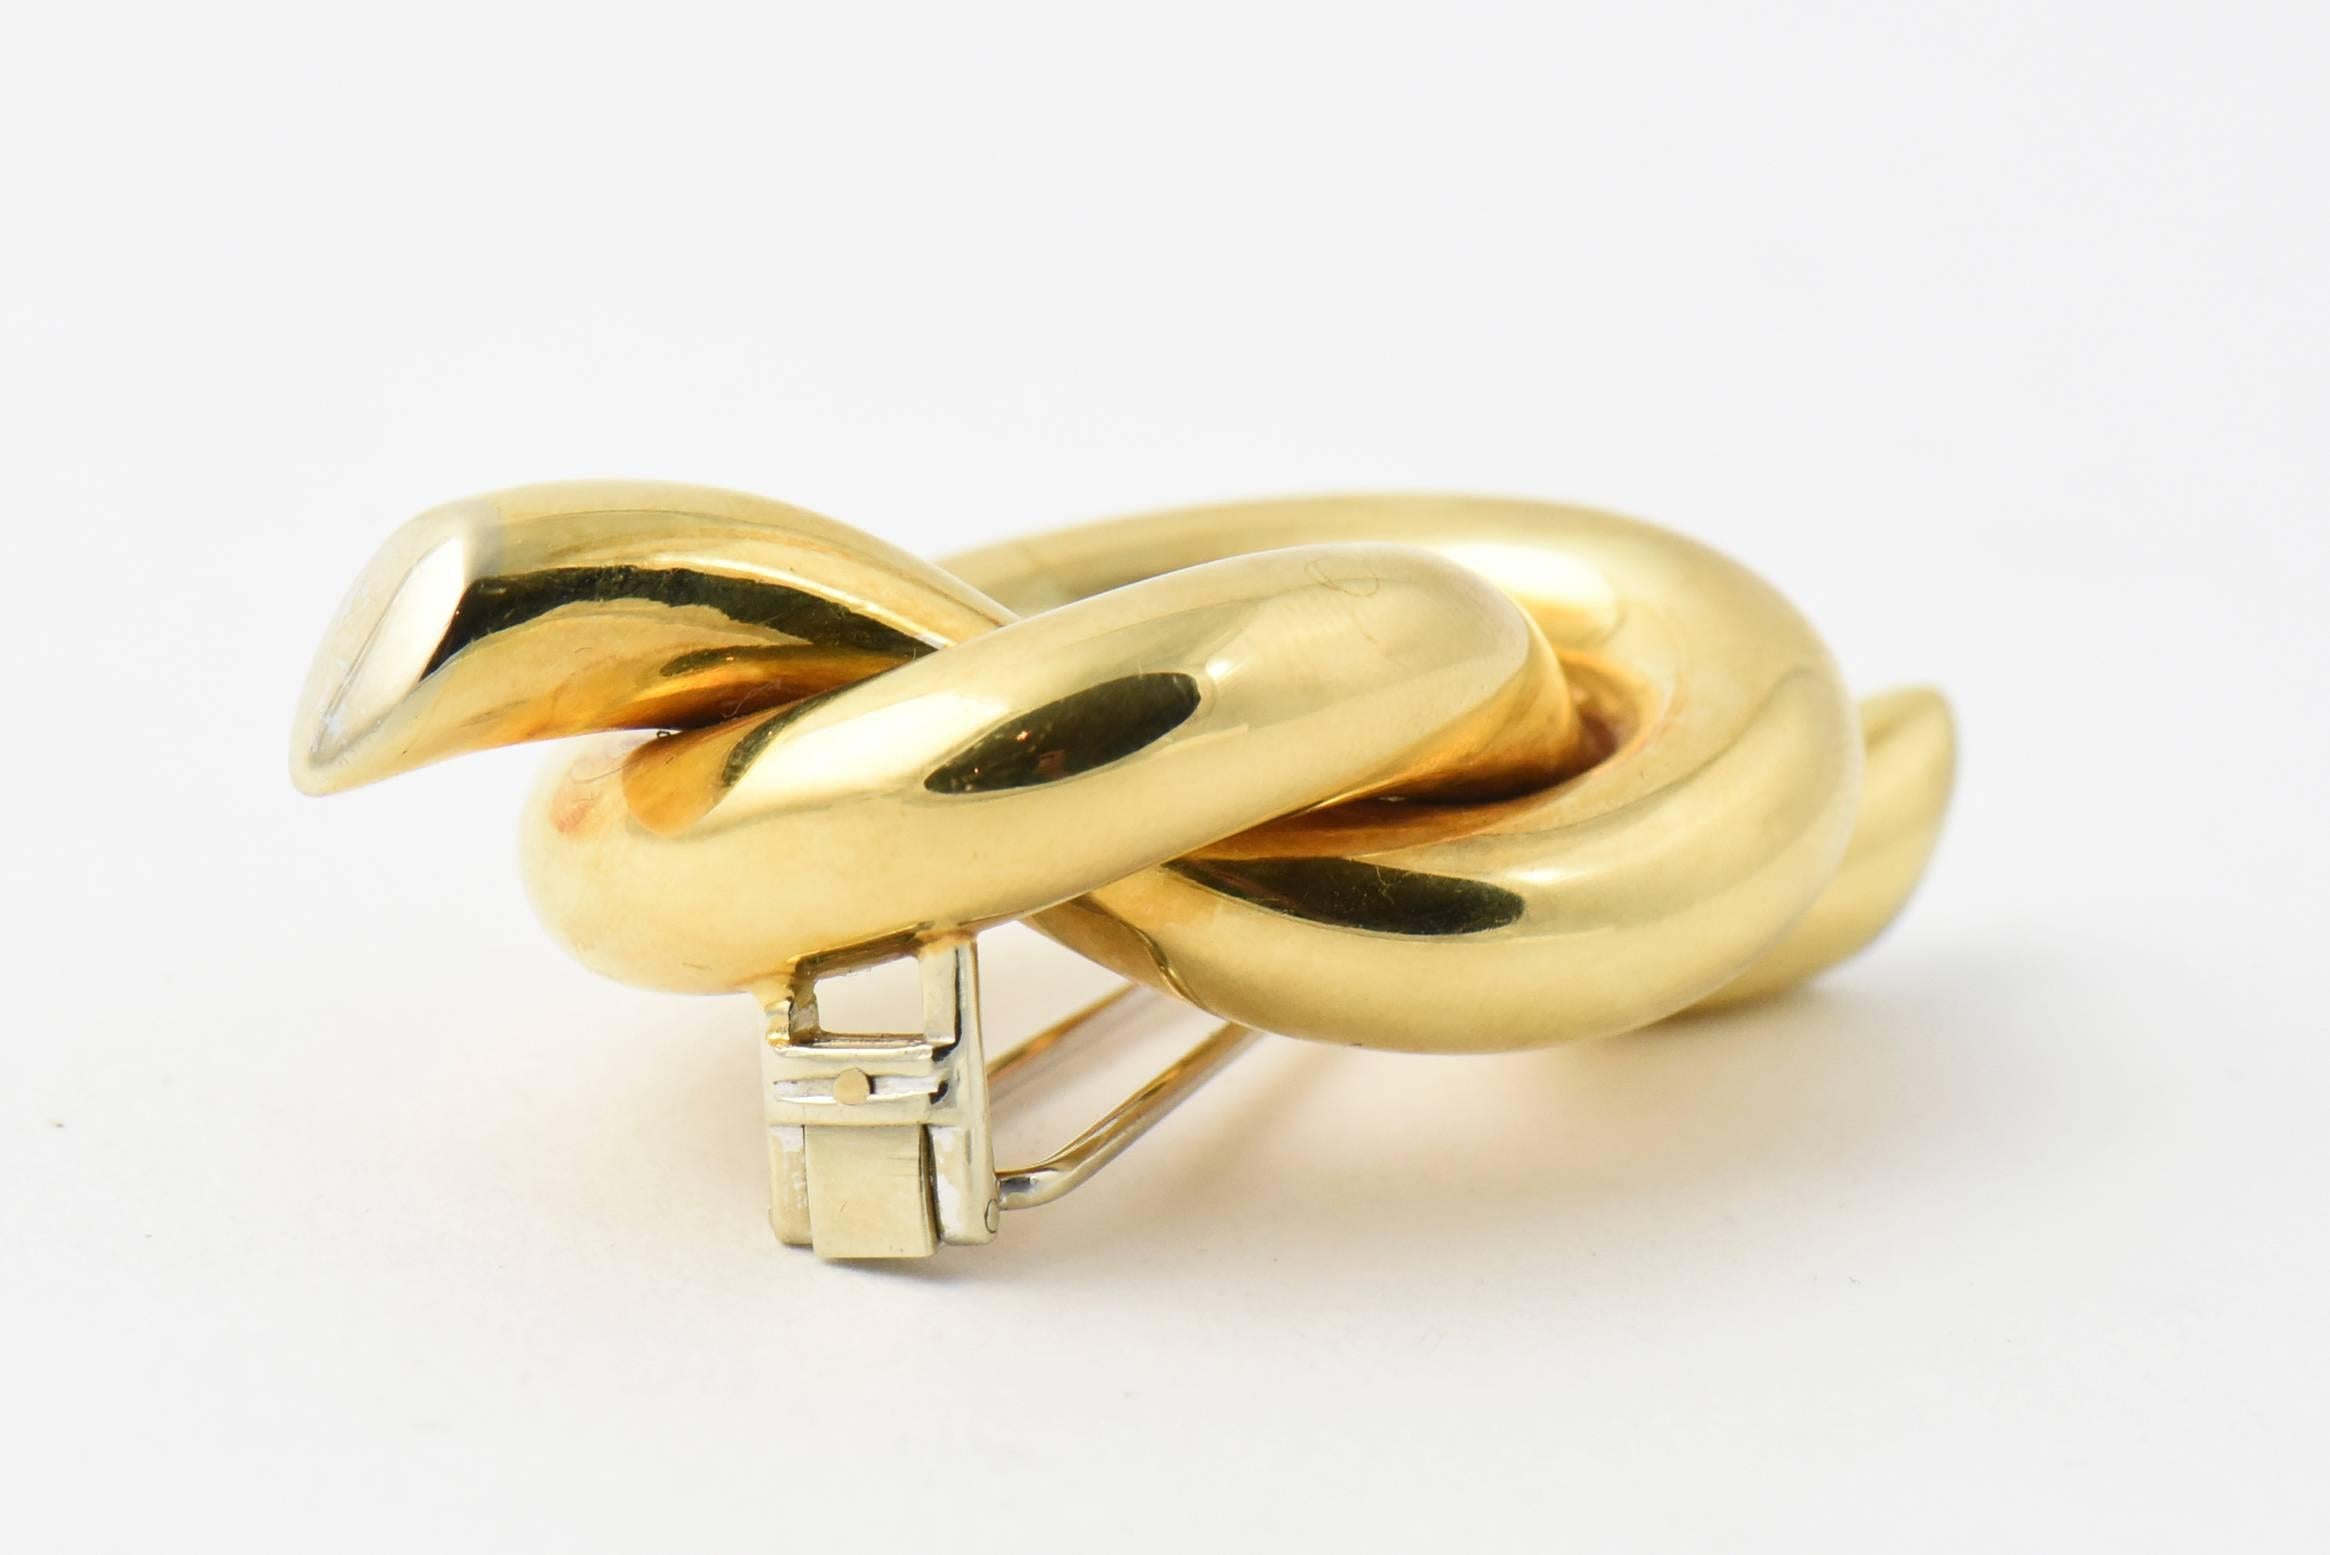 Italian Shiny Finish Mariner Knot Gold Brooch or Pin 4